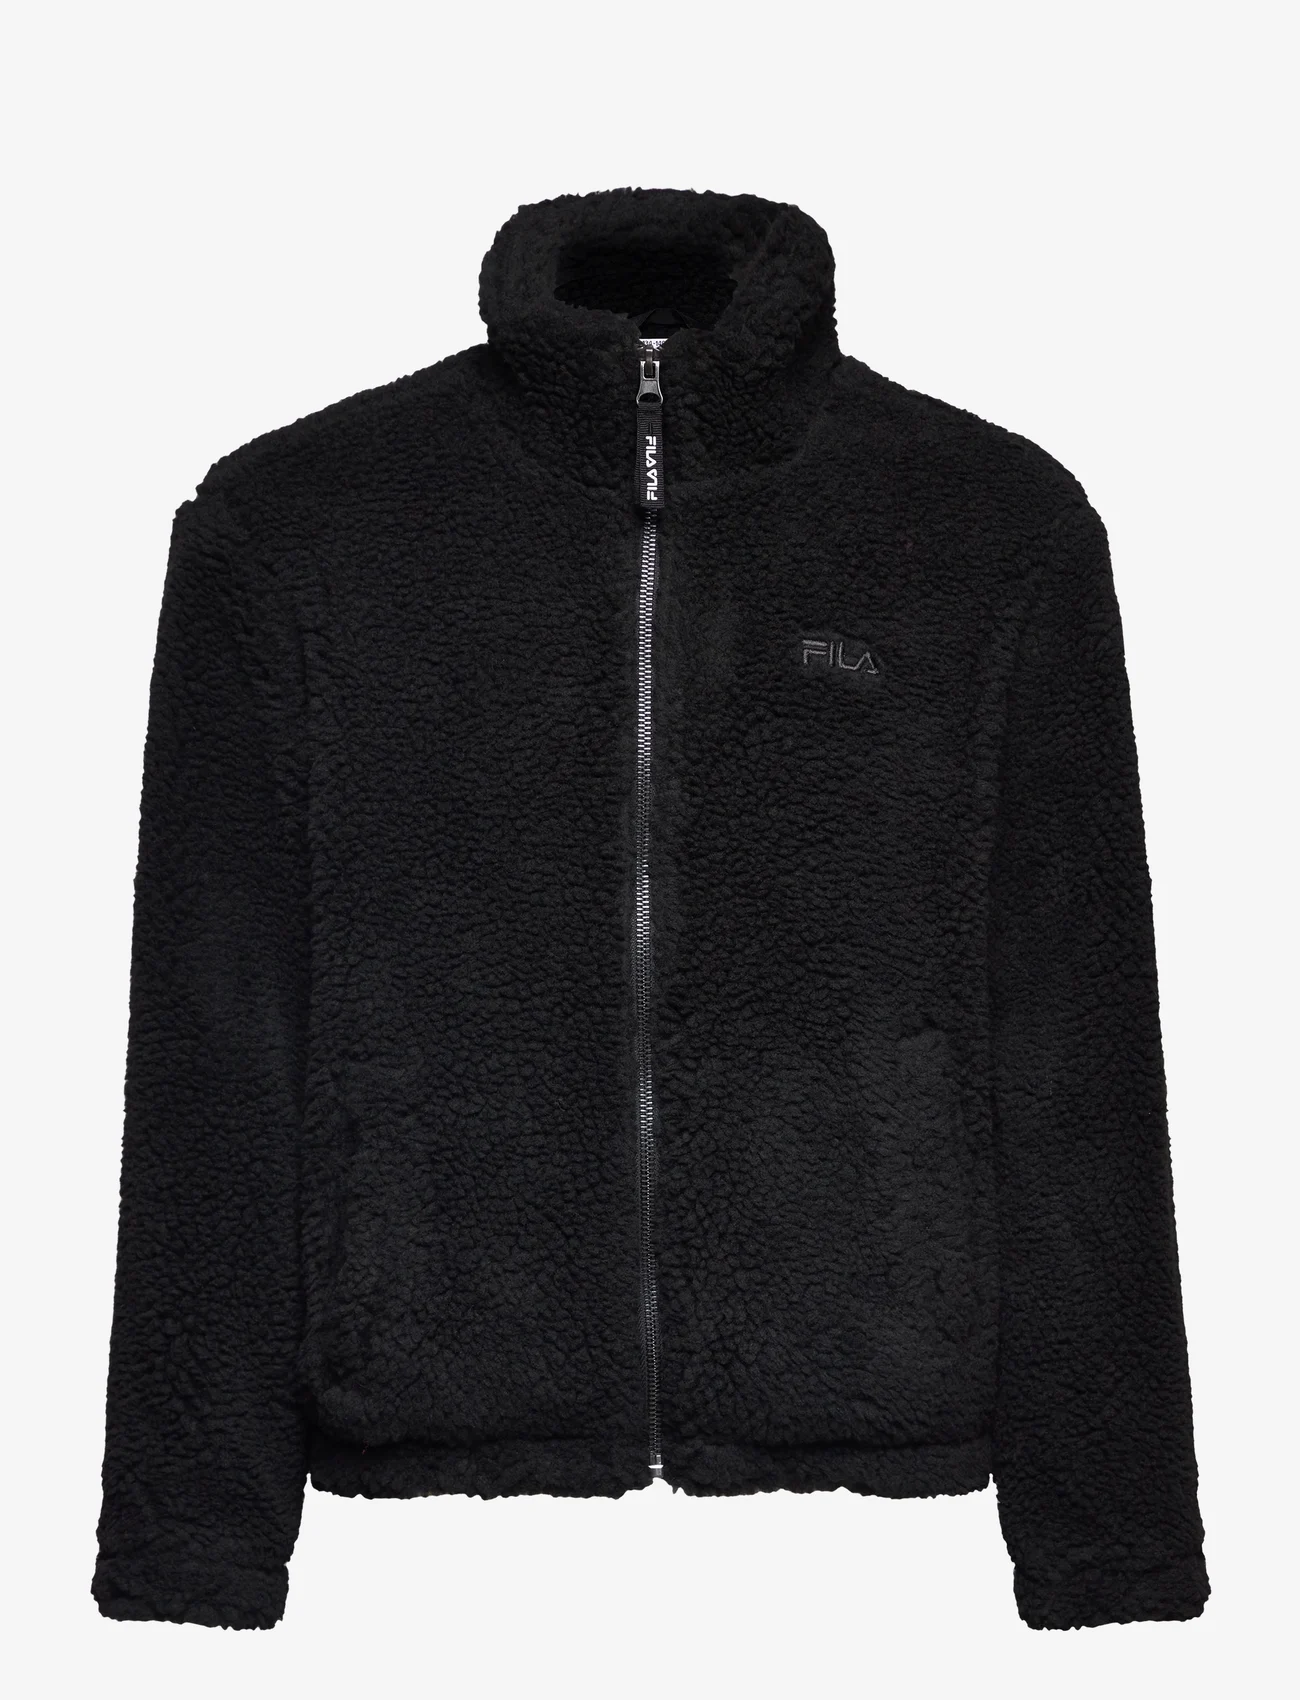 FILA - BERMBACH - fleece jacket - black - 0